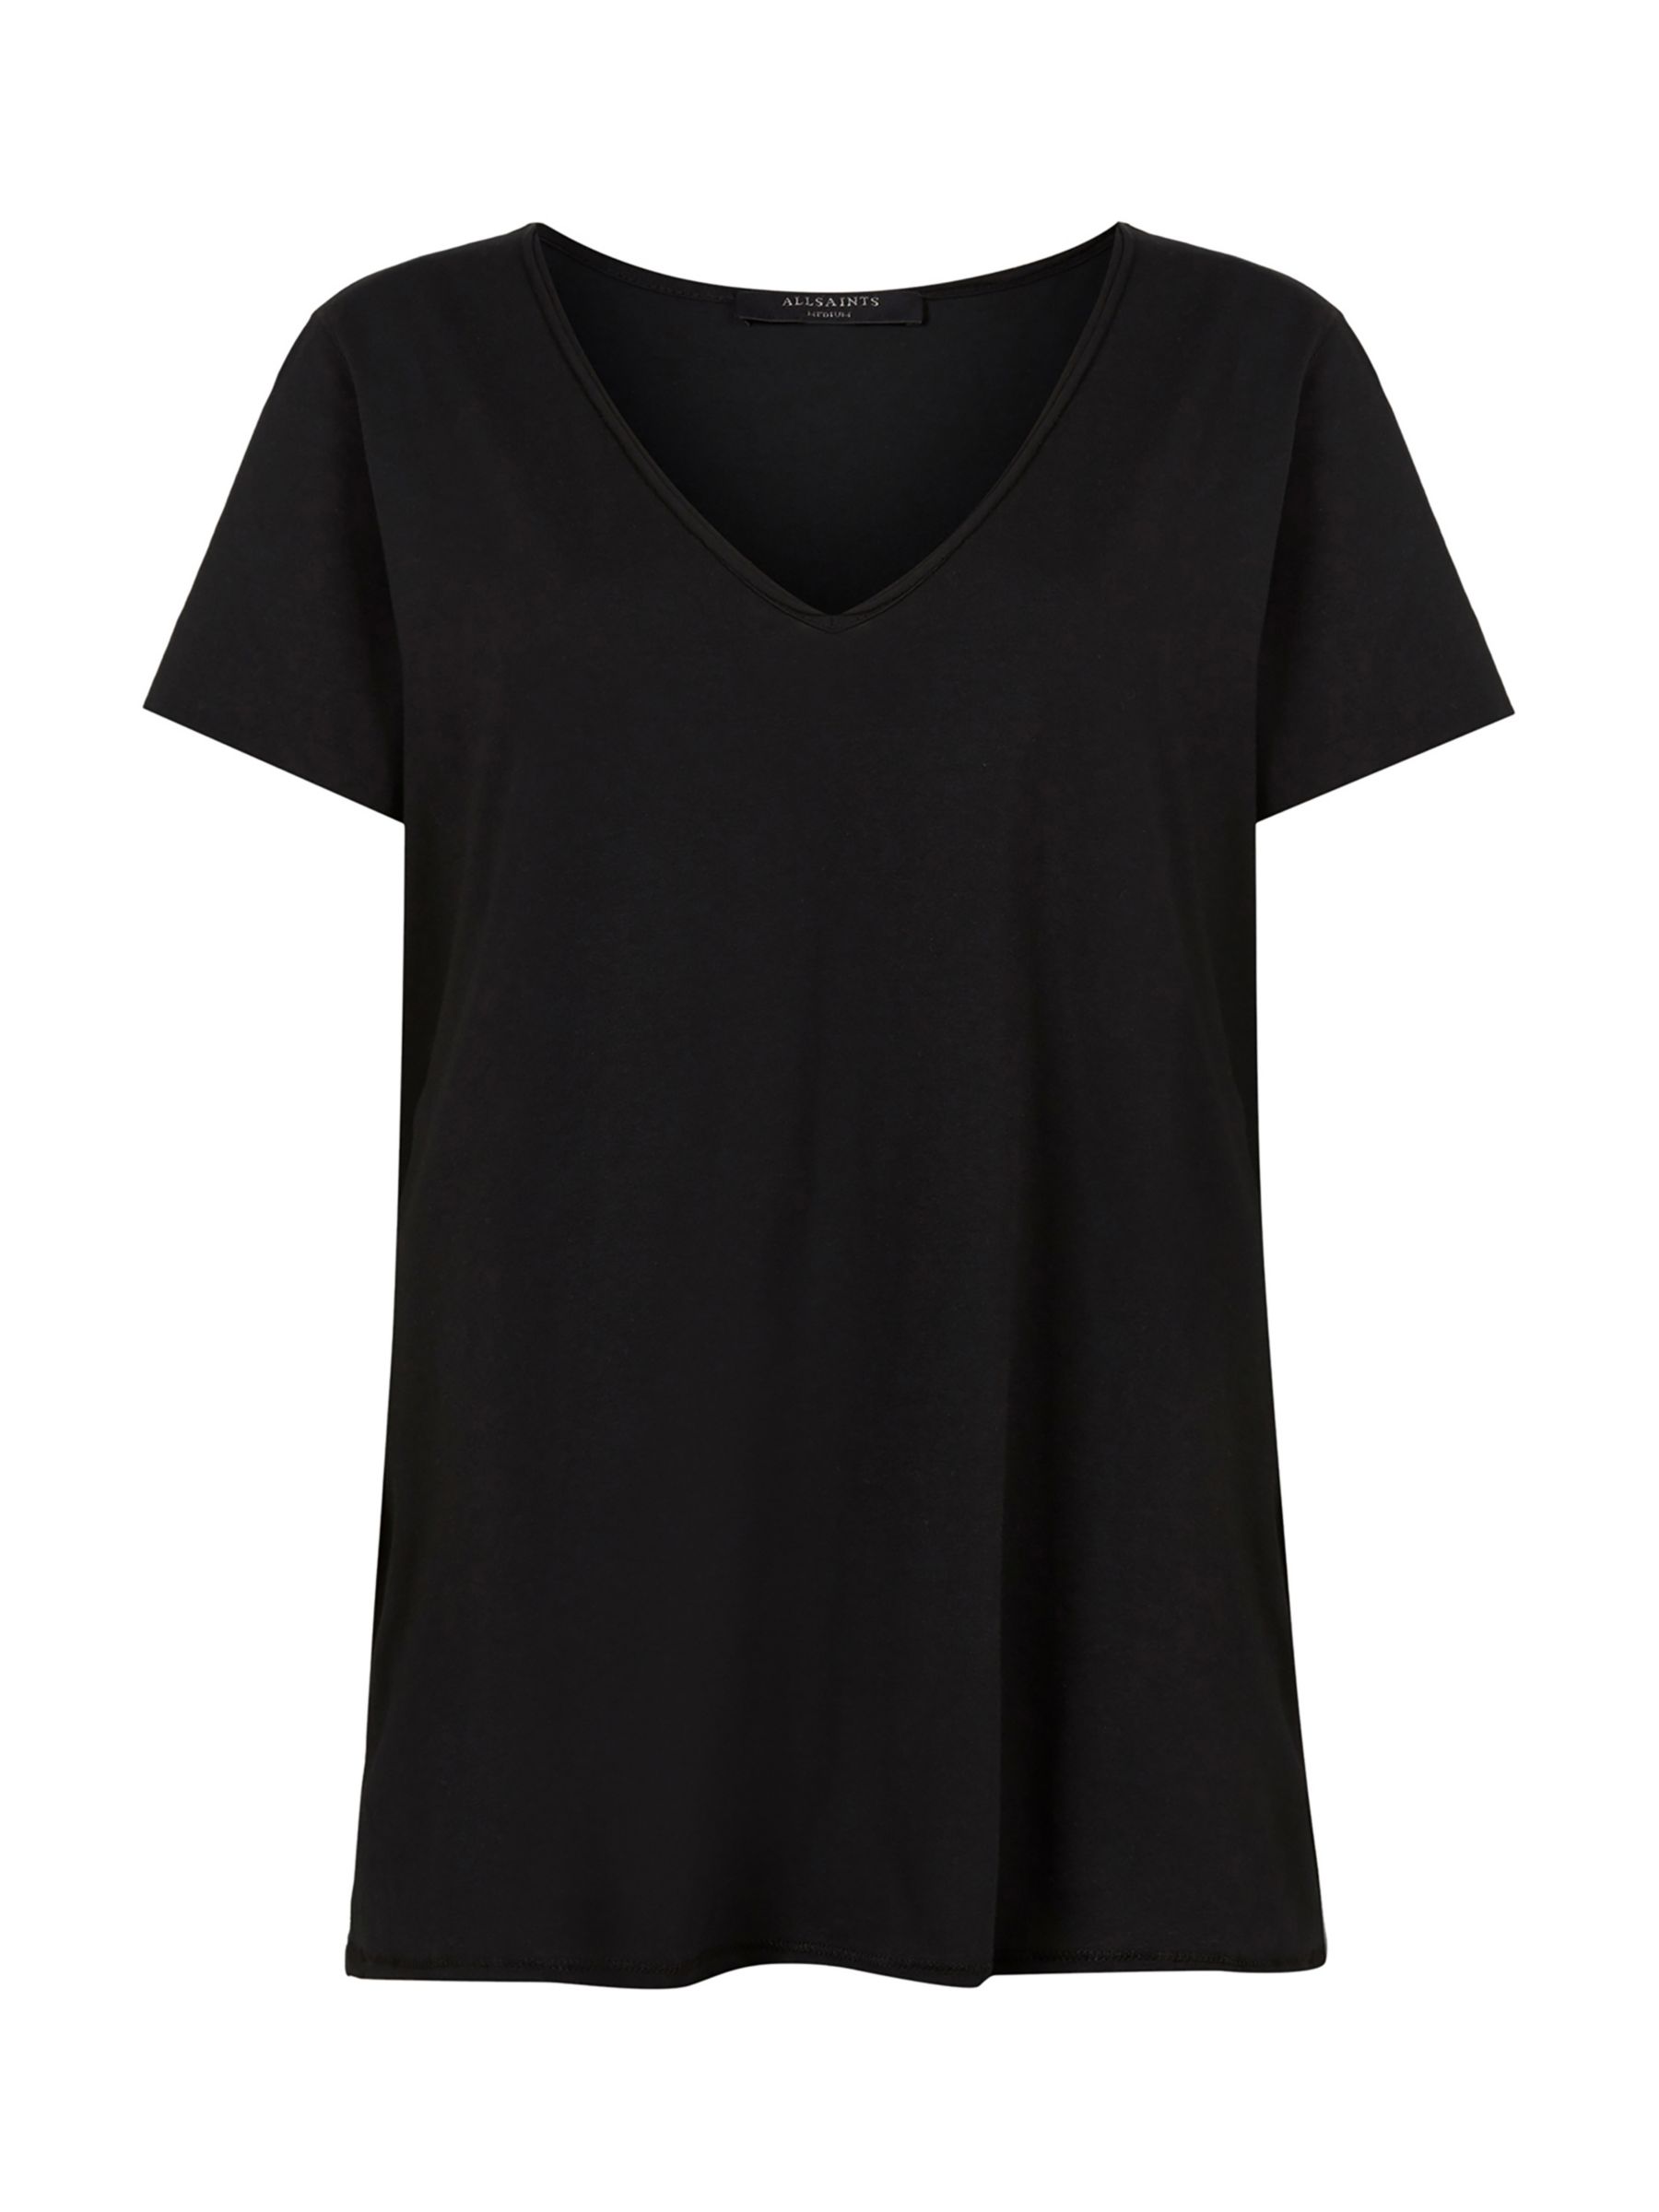 AllSaints Emelyn Tonic T-Shirt, Jet Black at John Lewis & Partners